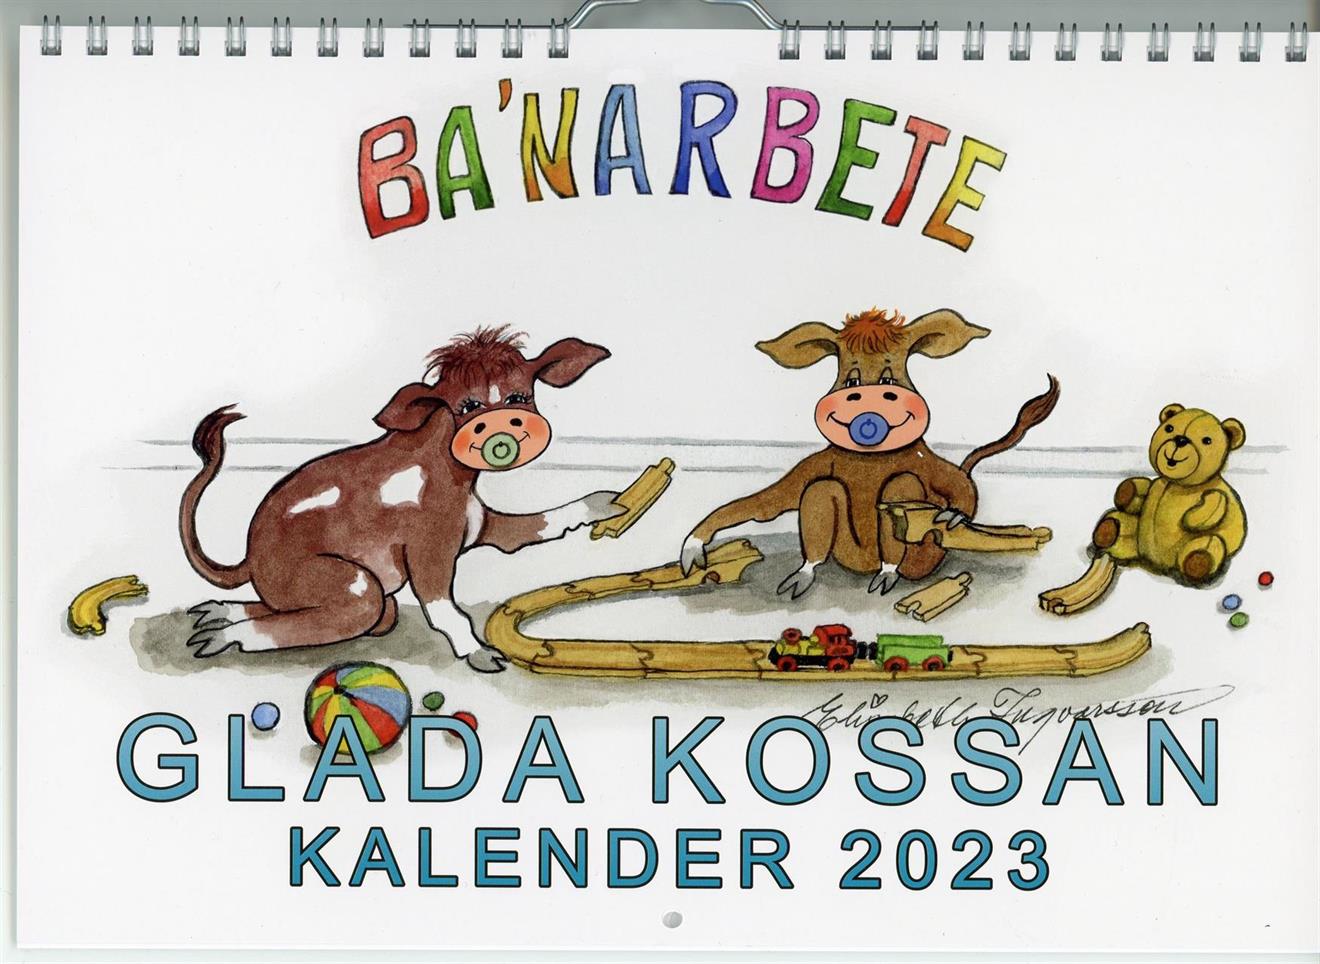 Glada Kossans Kalender 2023